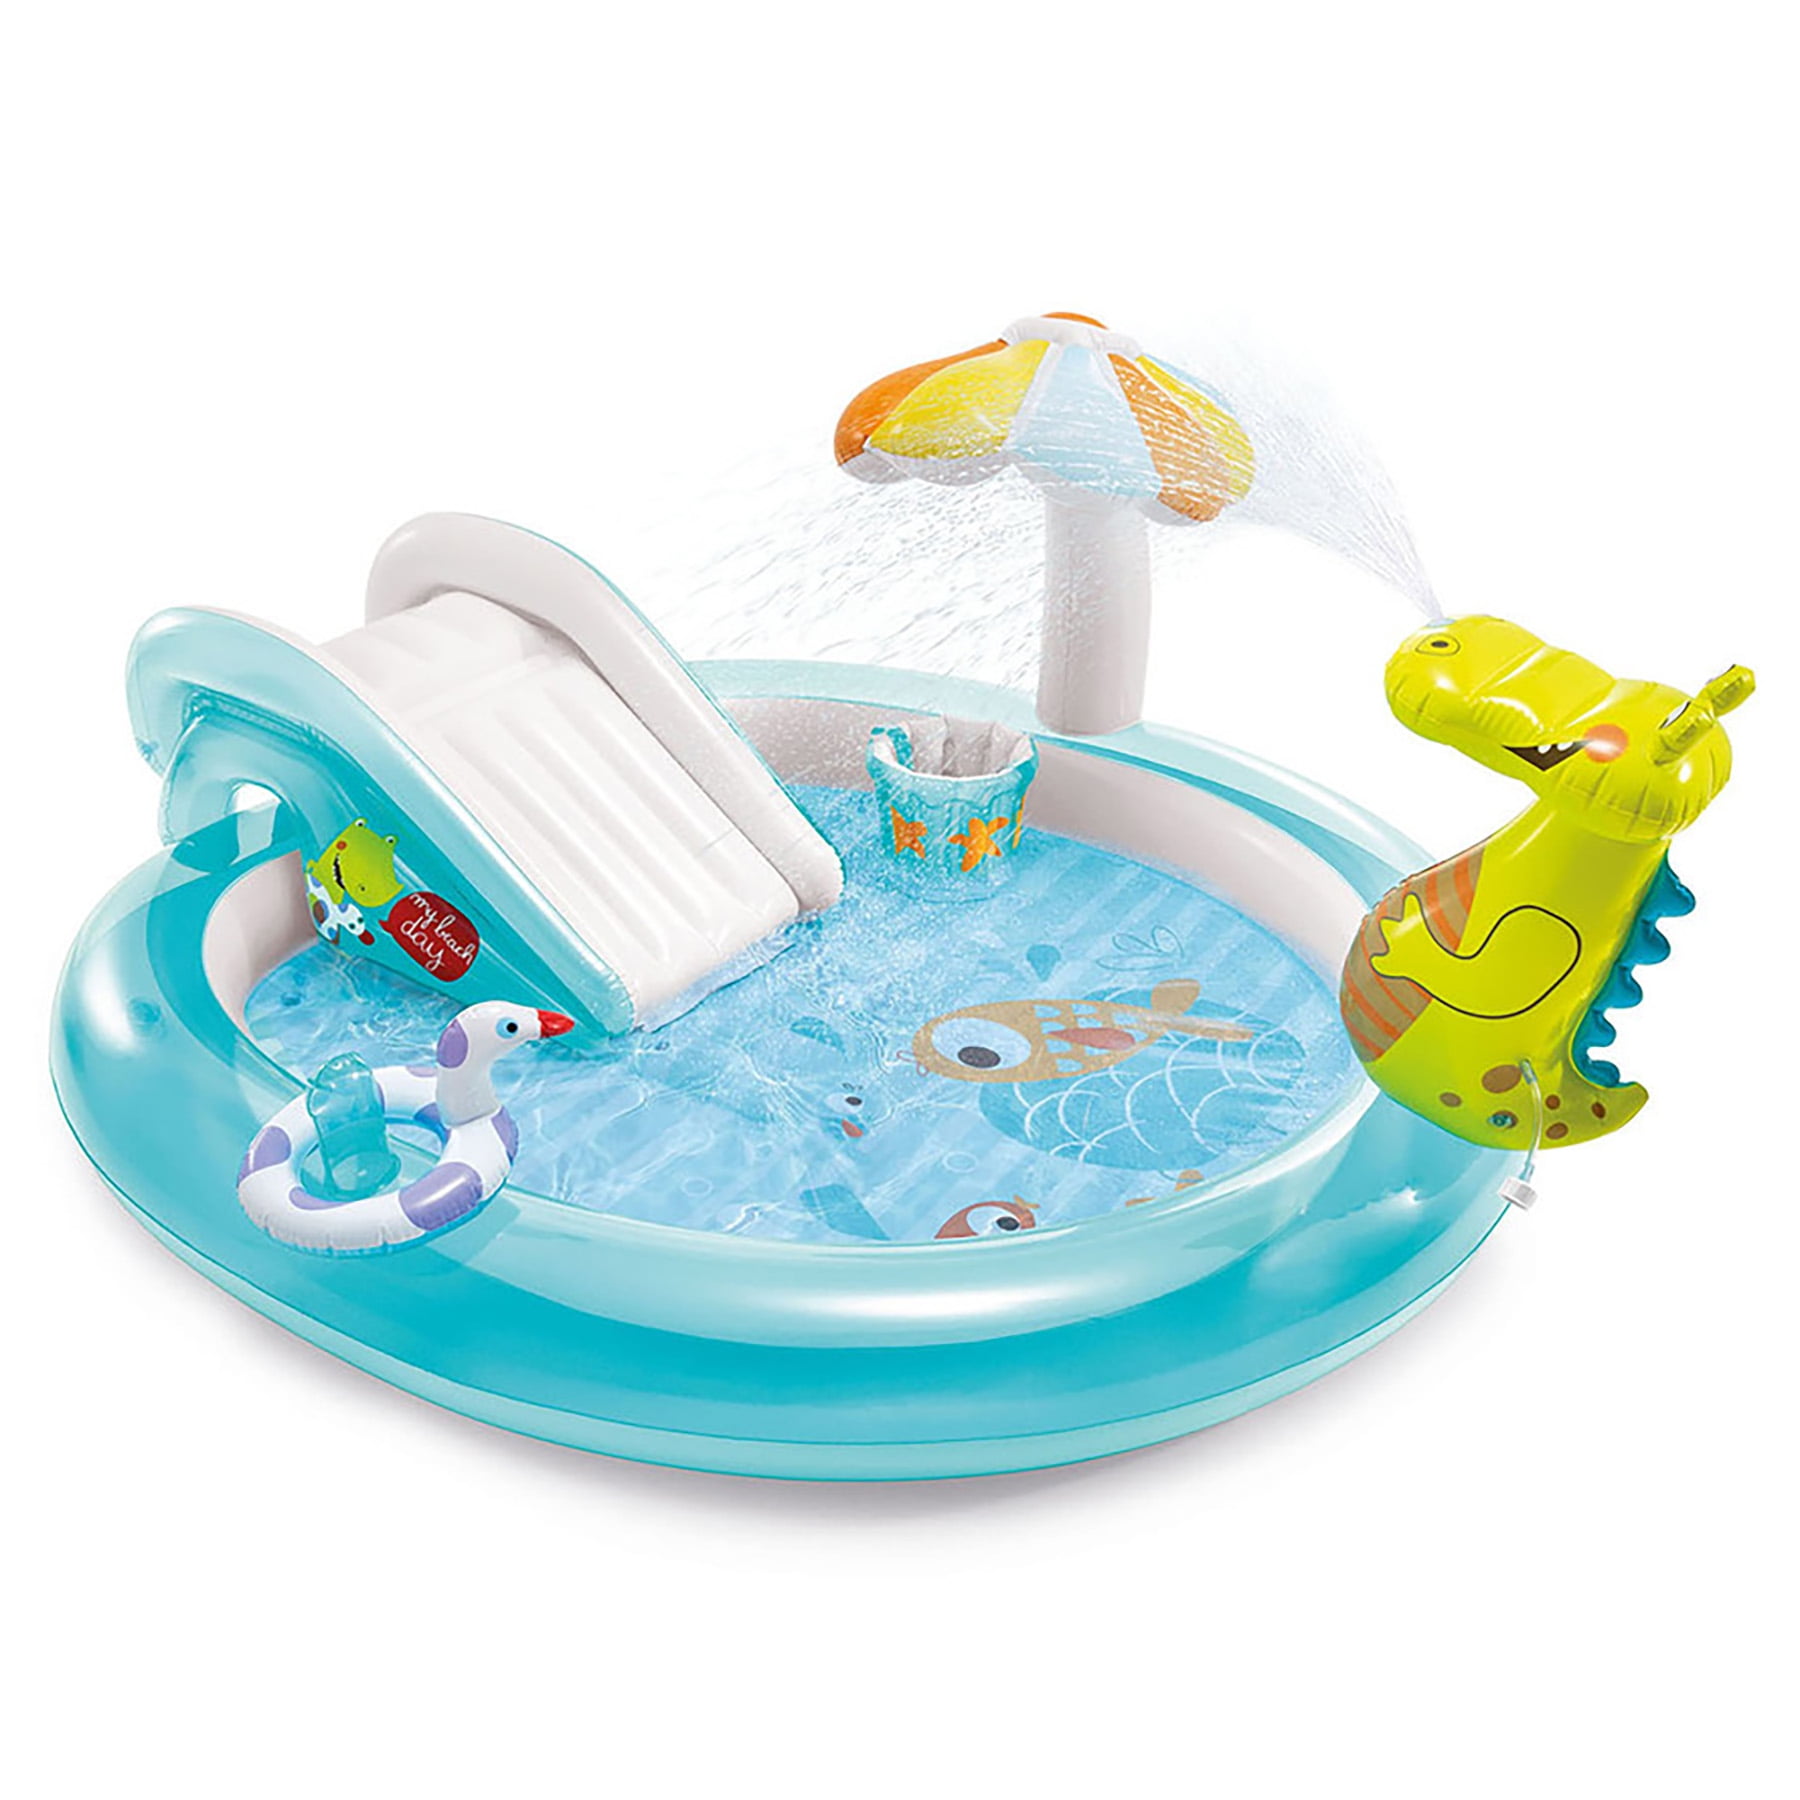 Intex Inflatable Mushroom Water Play Center Kiddie Baby Swimming Pool Ages 1 3 